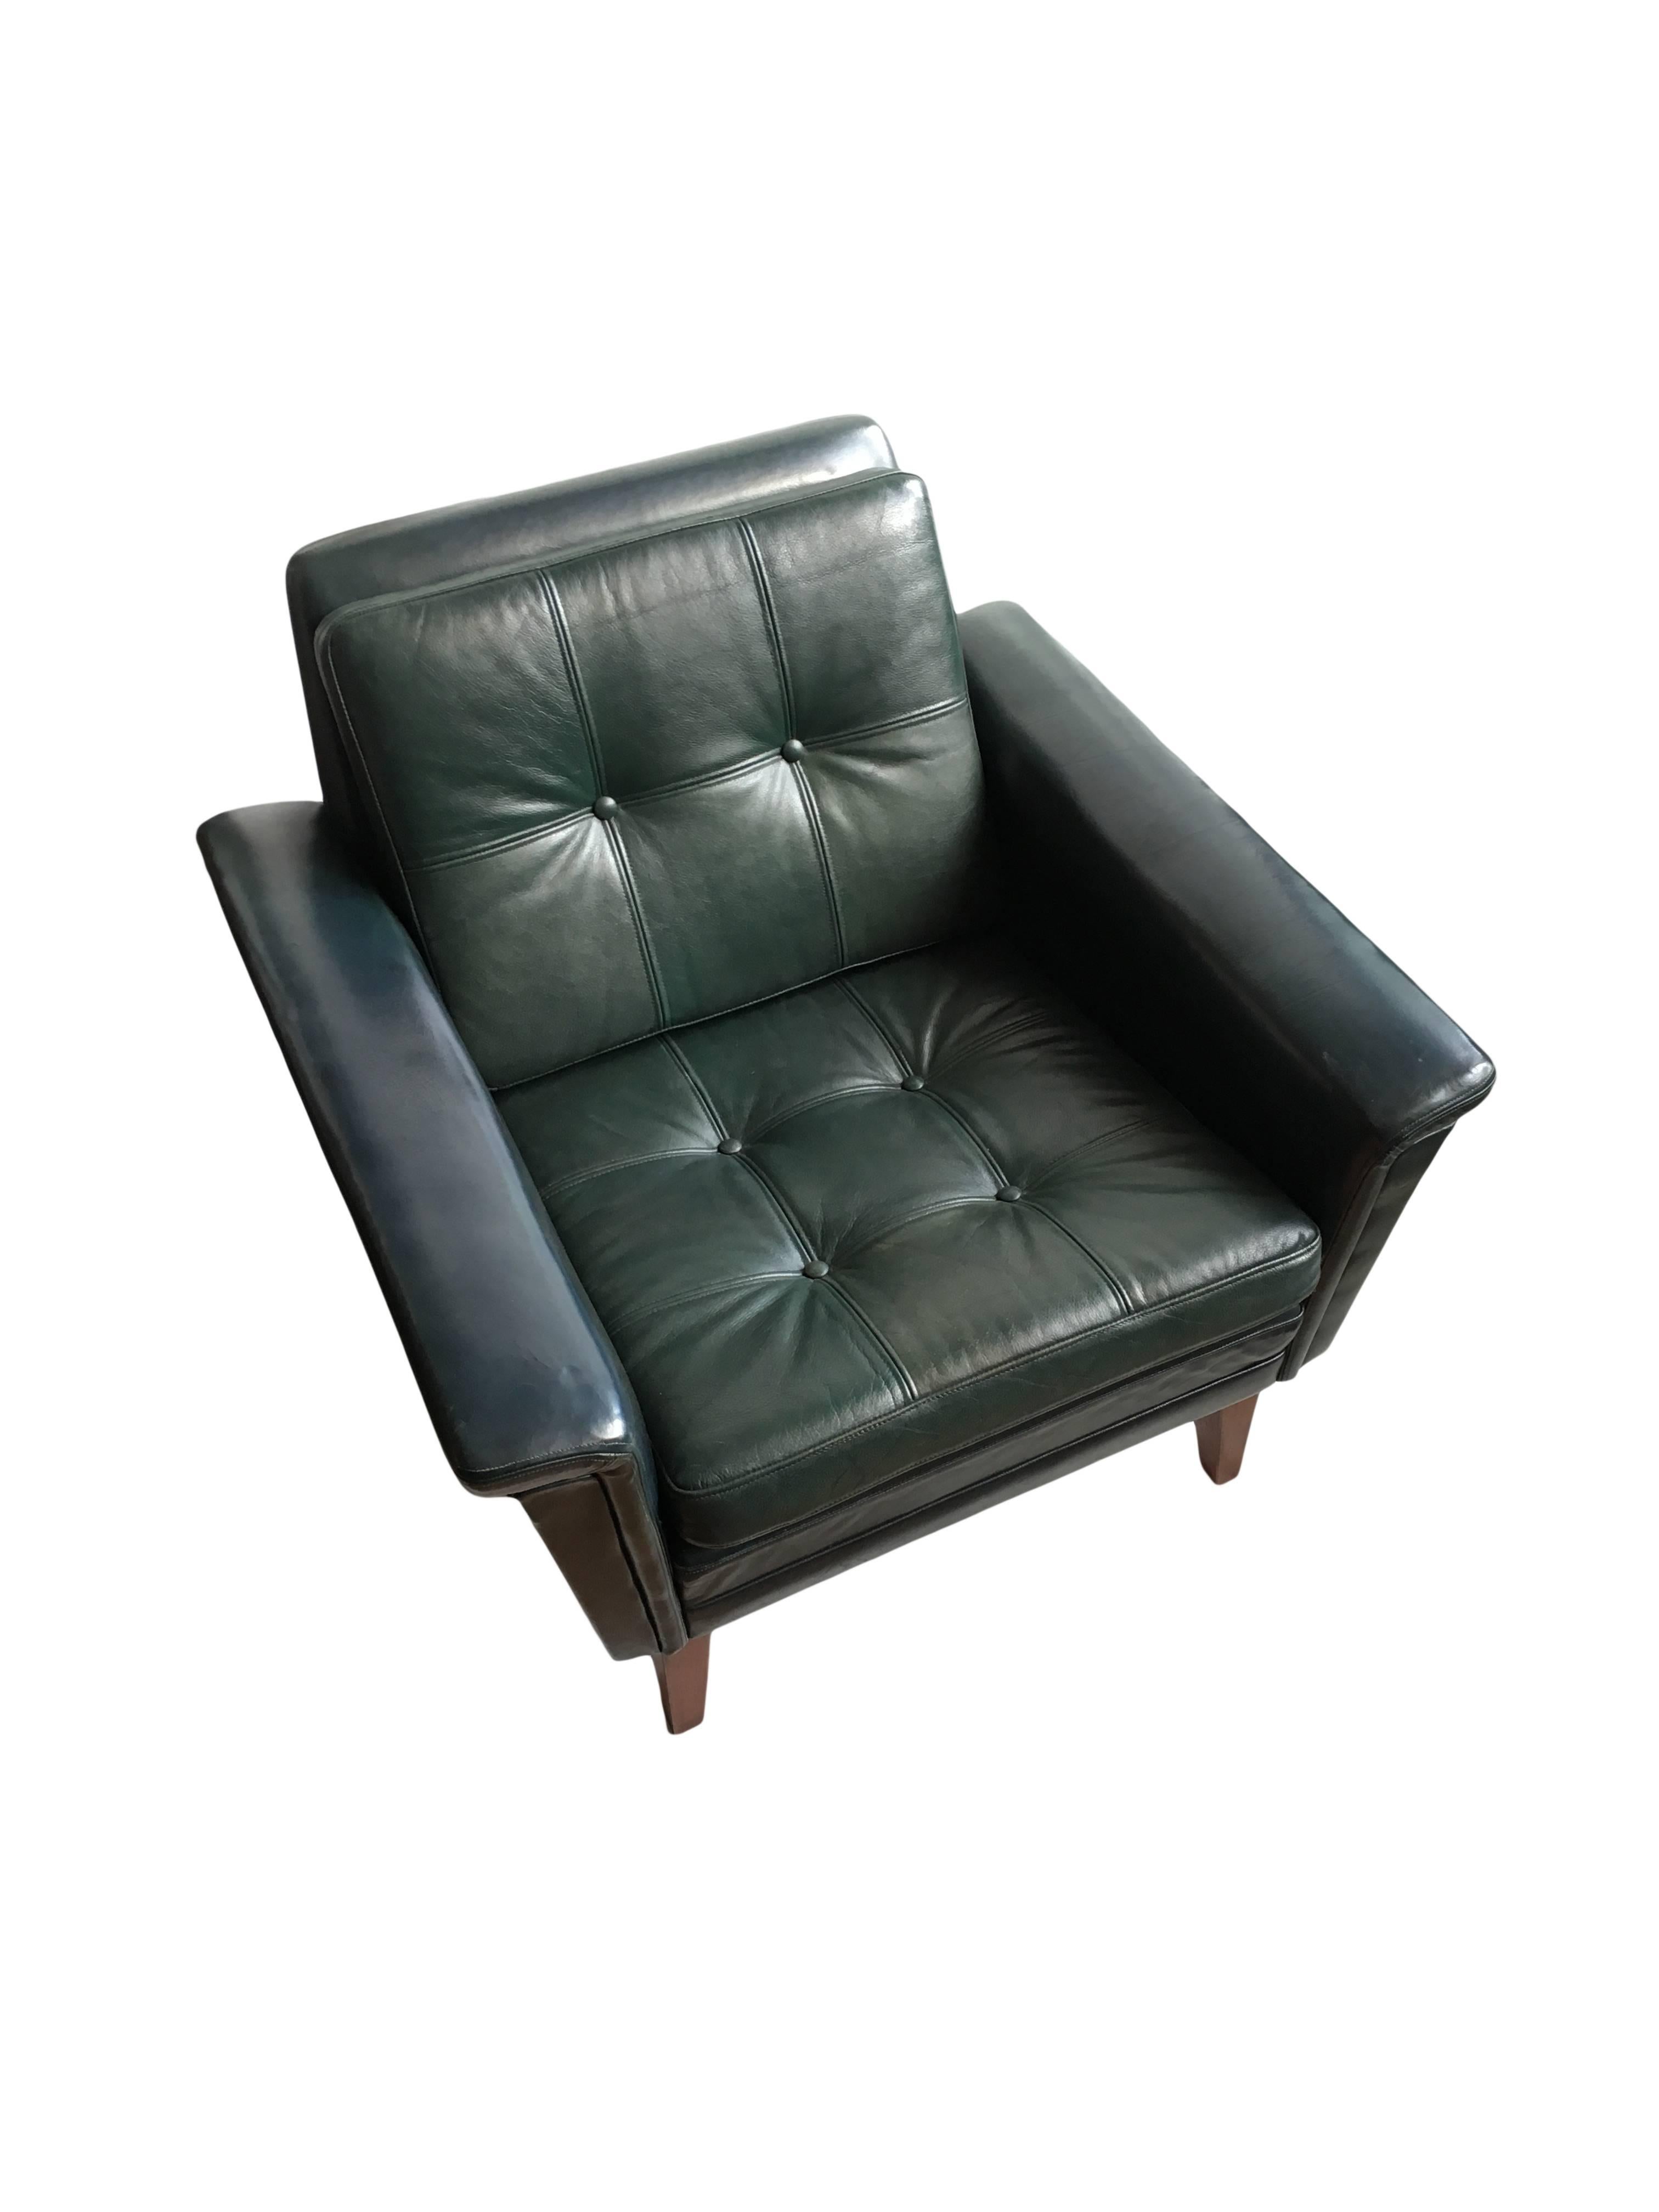 20th Century Danish Leather Club Chair